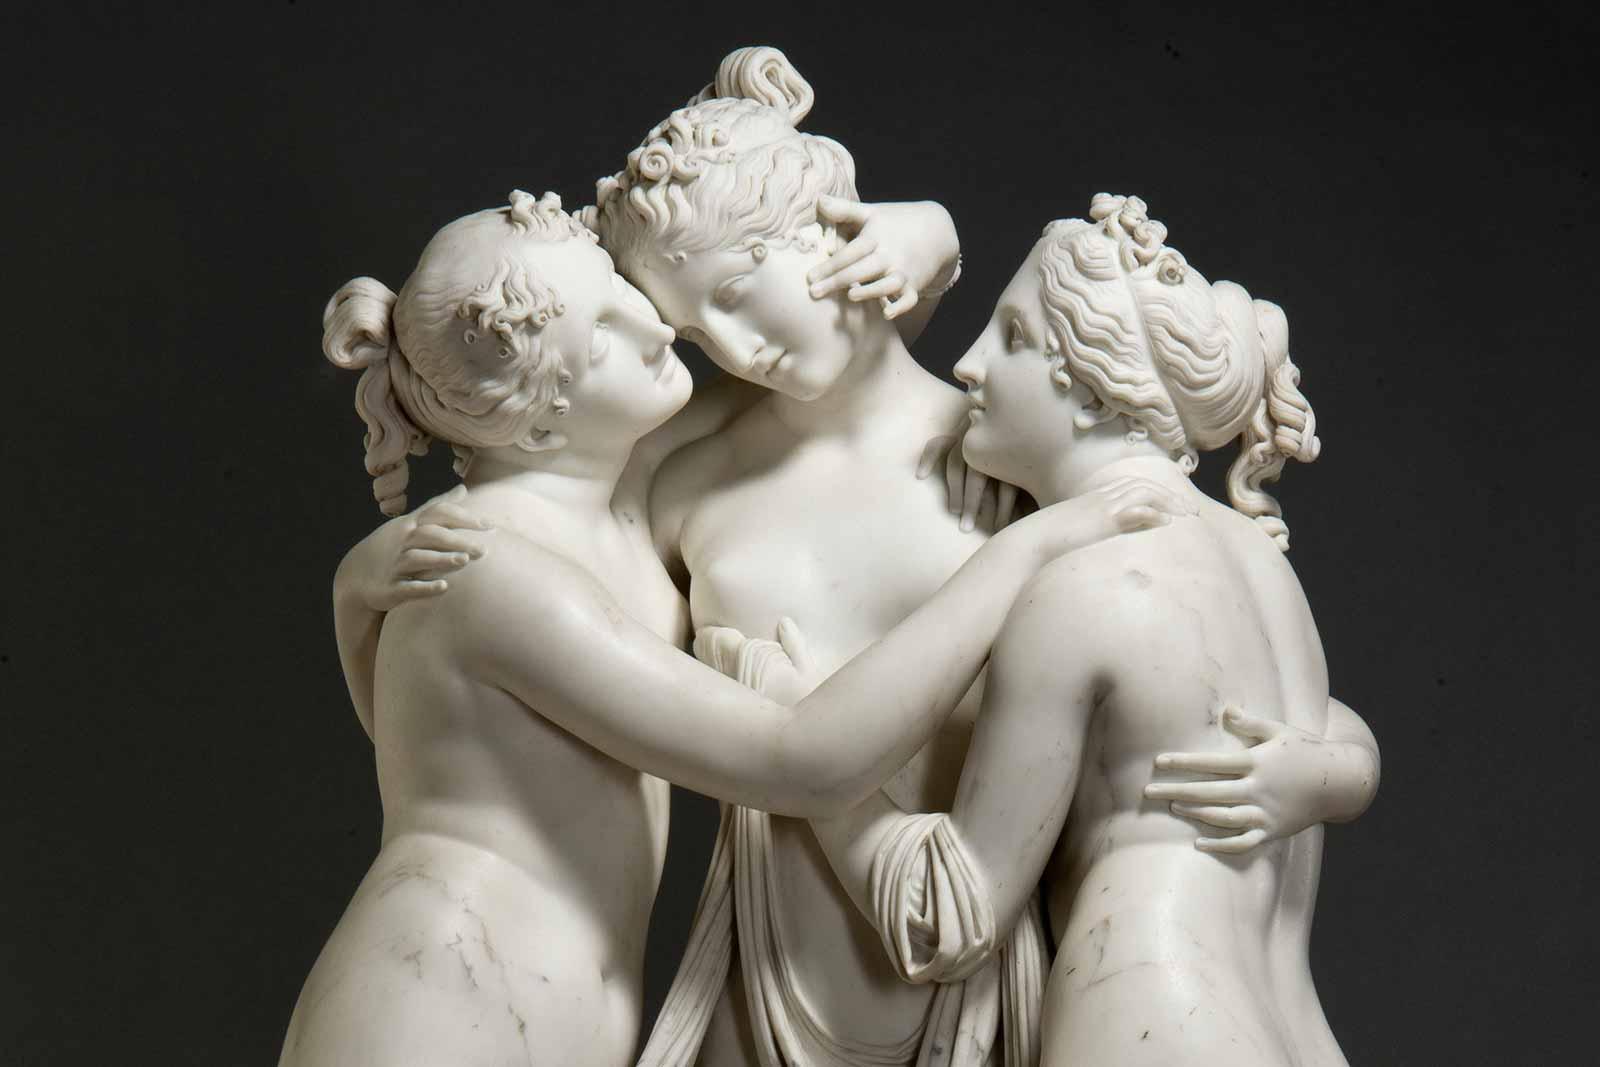 Antonio Canova, The Three Graces, 1812 - 1816.